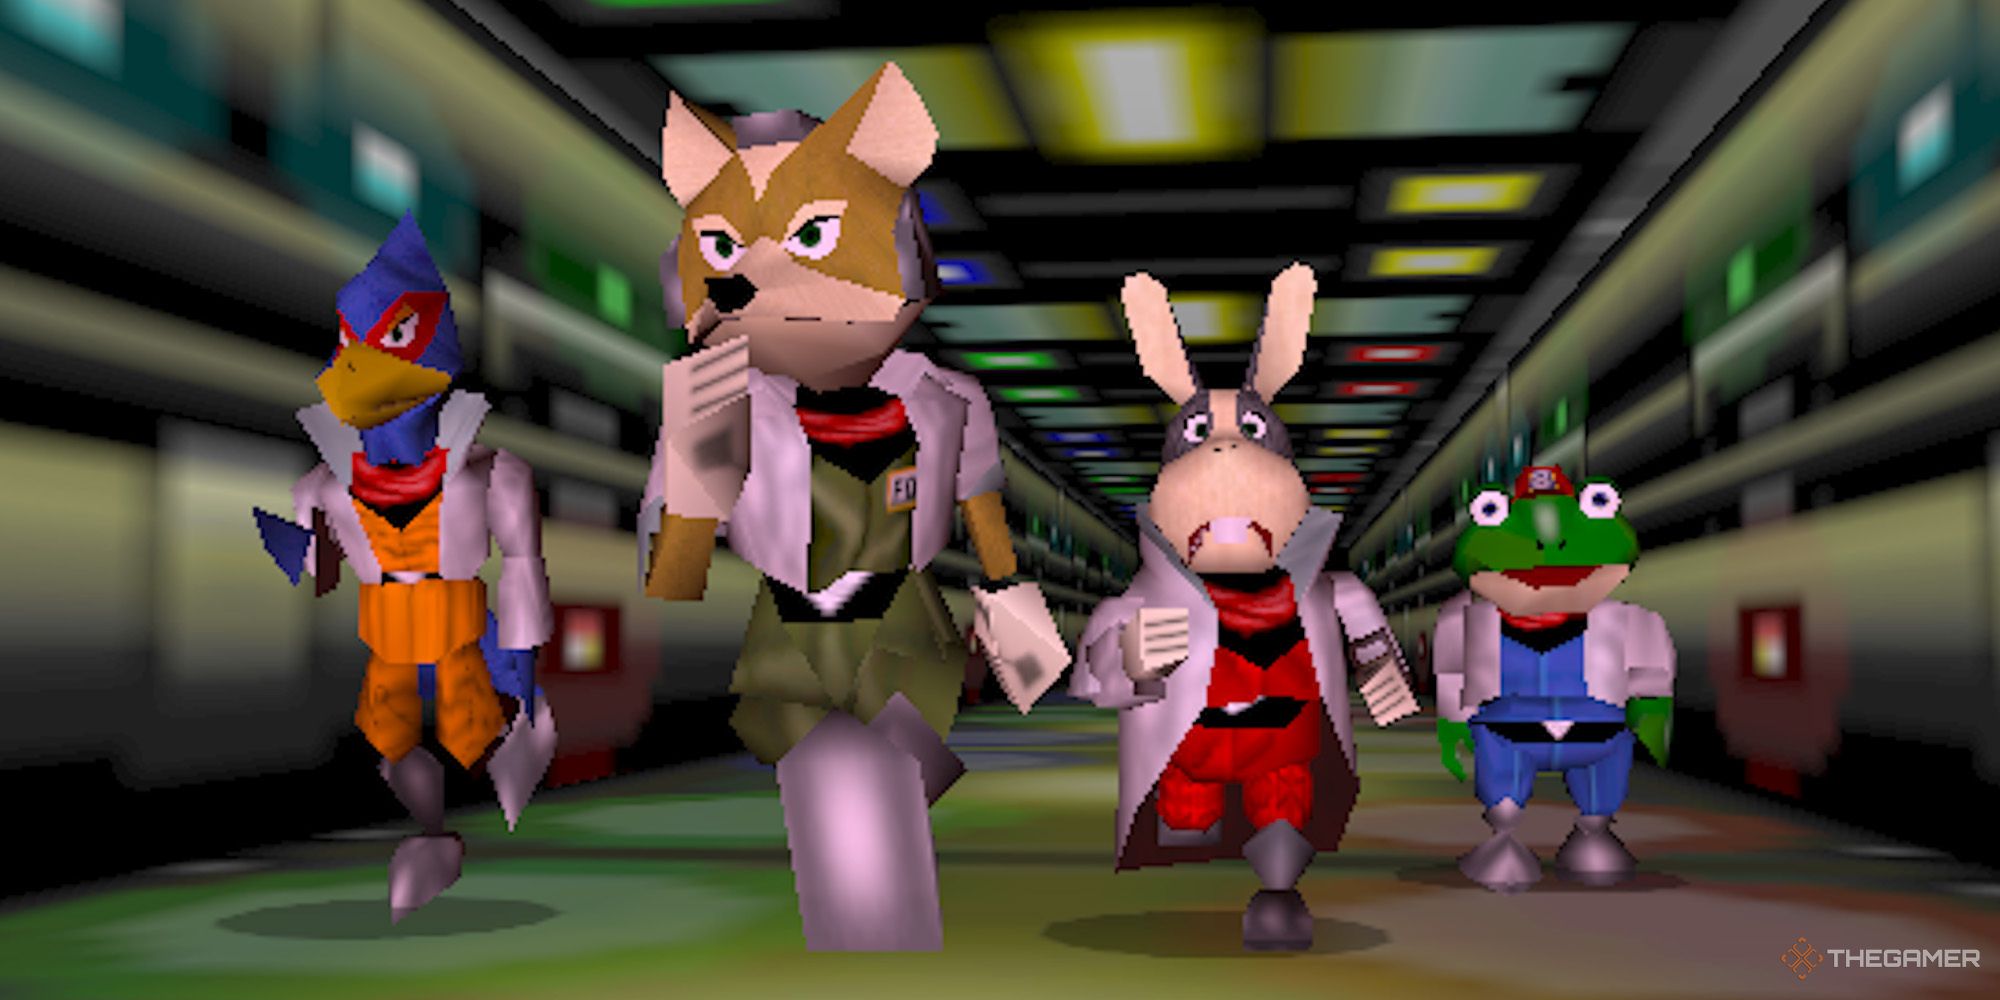 Star Fox 64 - Fox, Falco, Peppy and Slippy running through the Great Fox